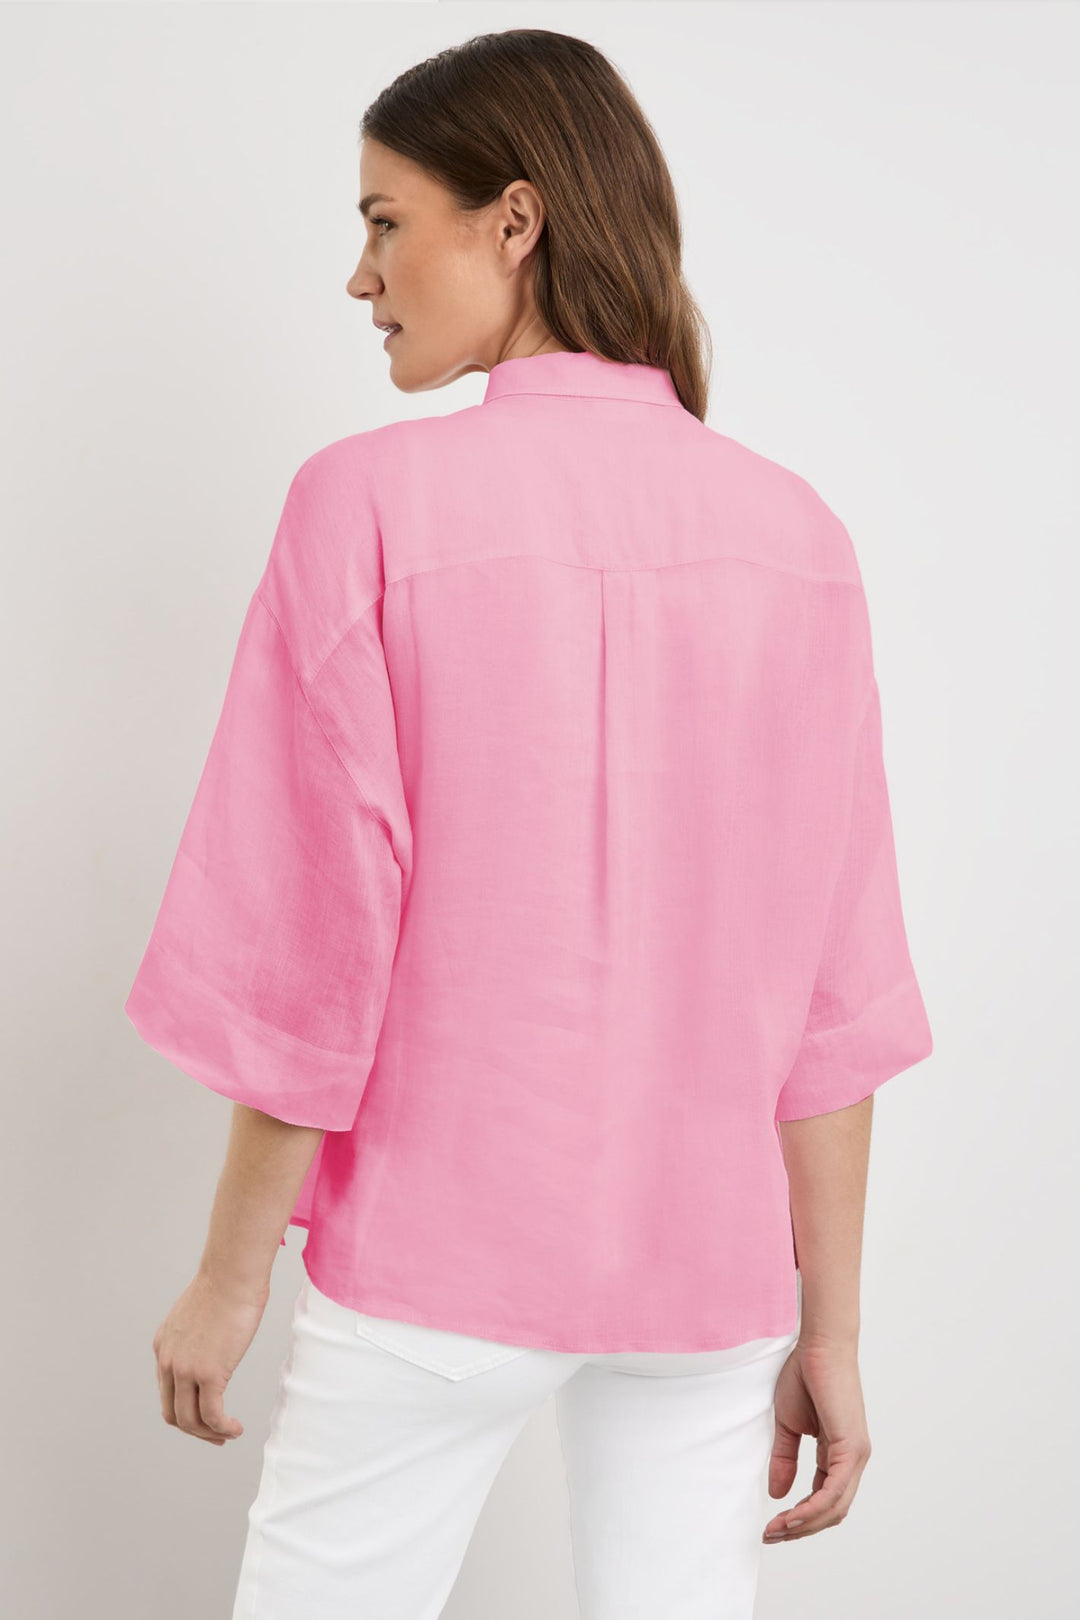 Gerry Weber 360042 Milkshake Pink Short Sleeve Shirt